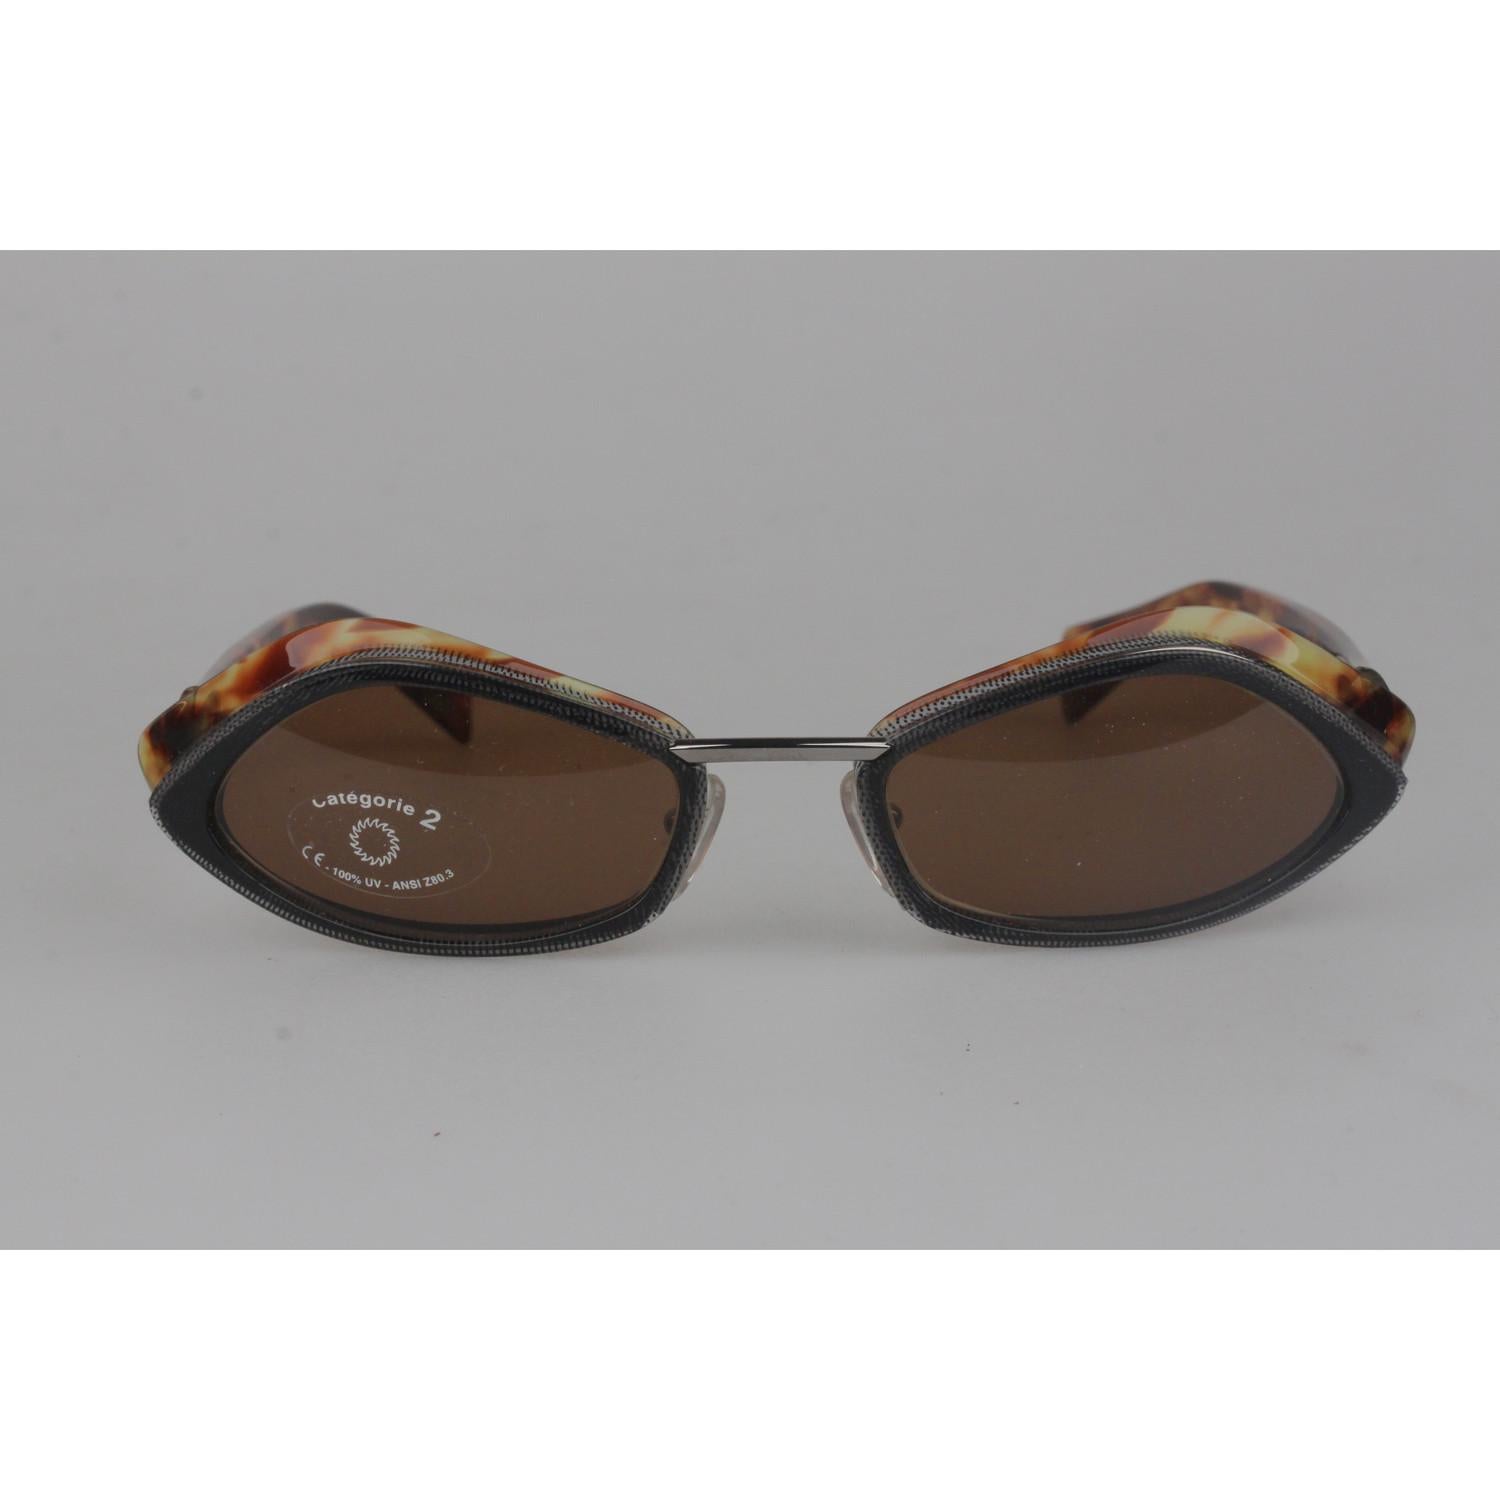 Alain Mikli Paris Vintage Sunglasses A0227-04 55mm New Old Stock 8